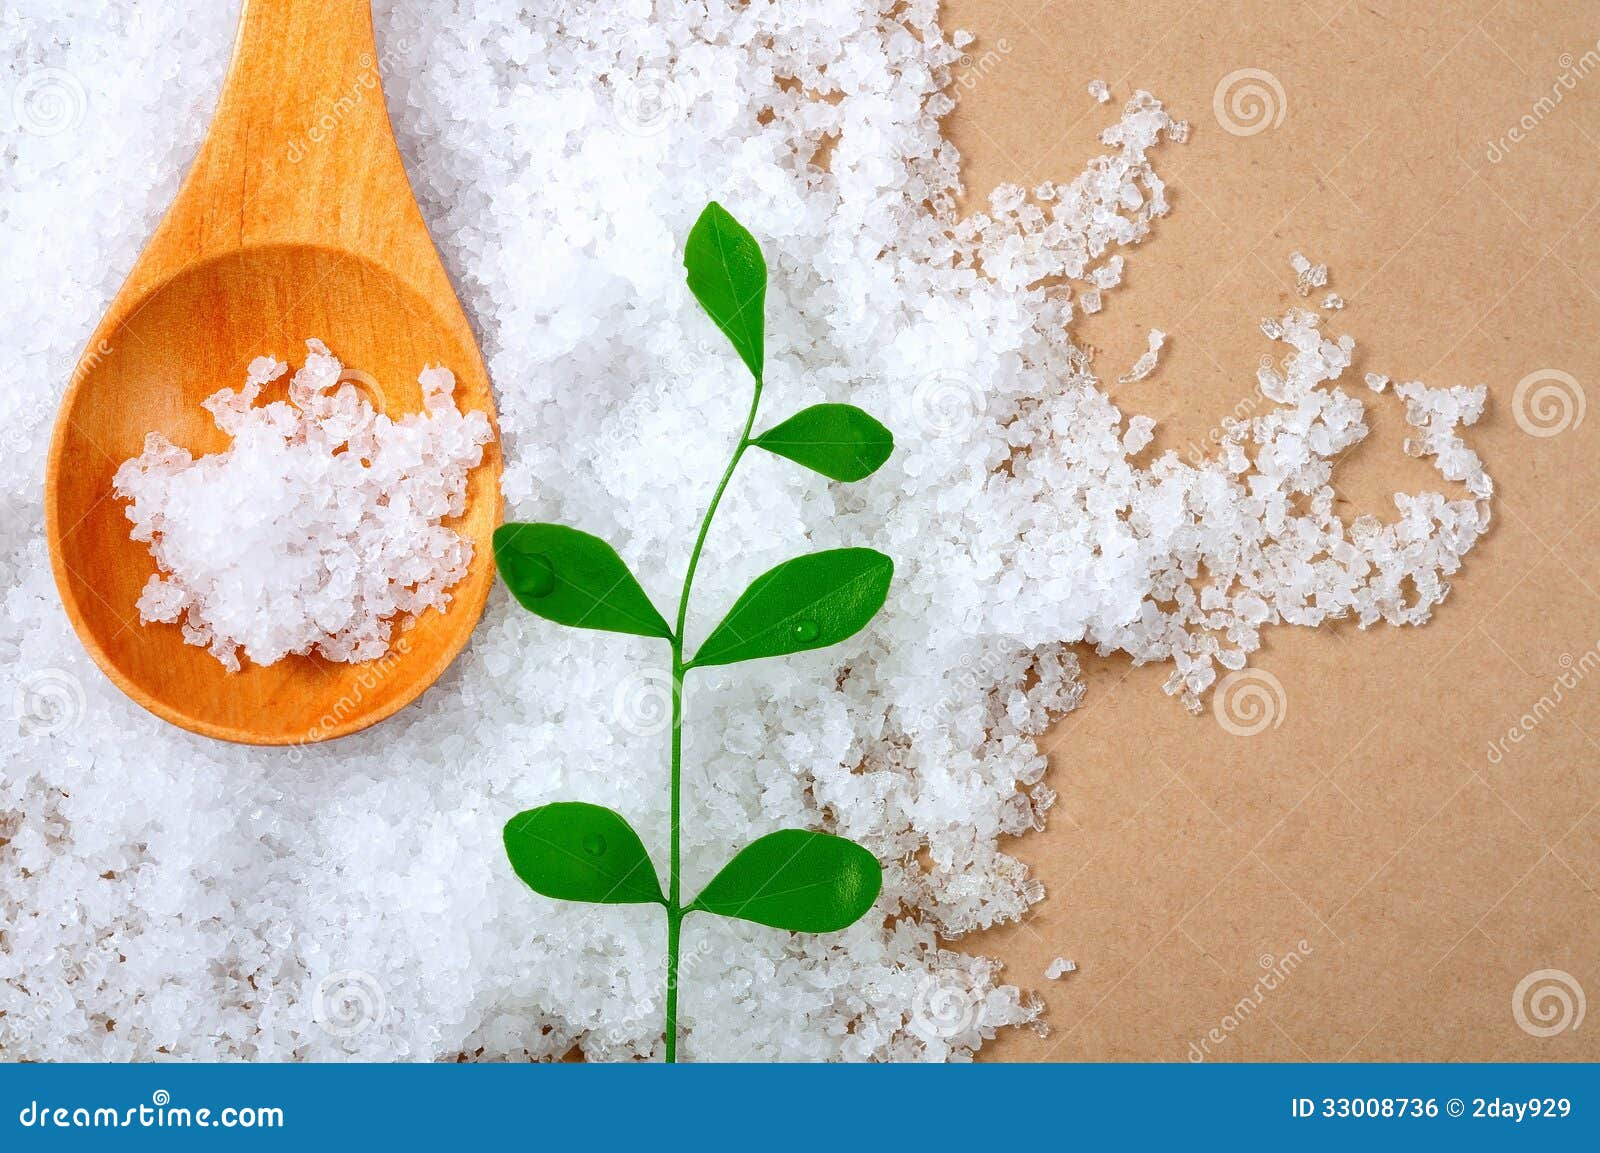 sea salt, health, seasoning, bay salt, solar salt, saltiness